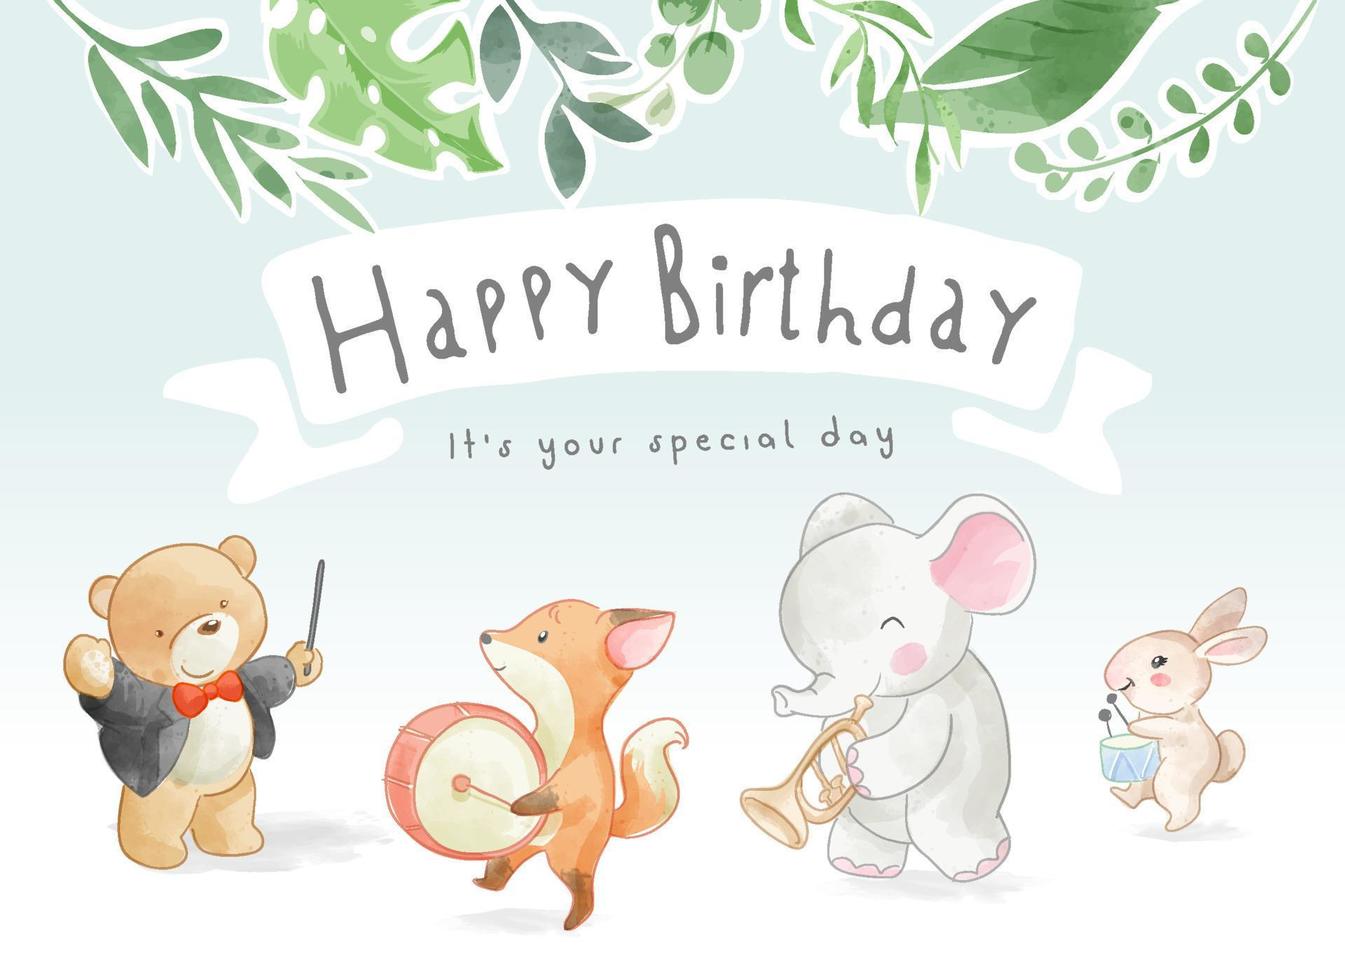 happy birthday slogan with cute animals music parade illustration vector